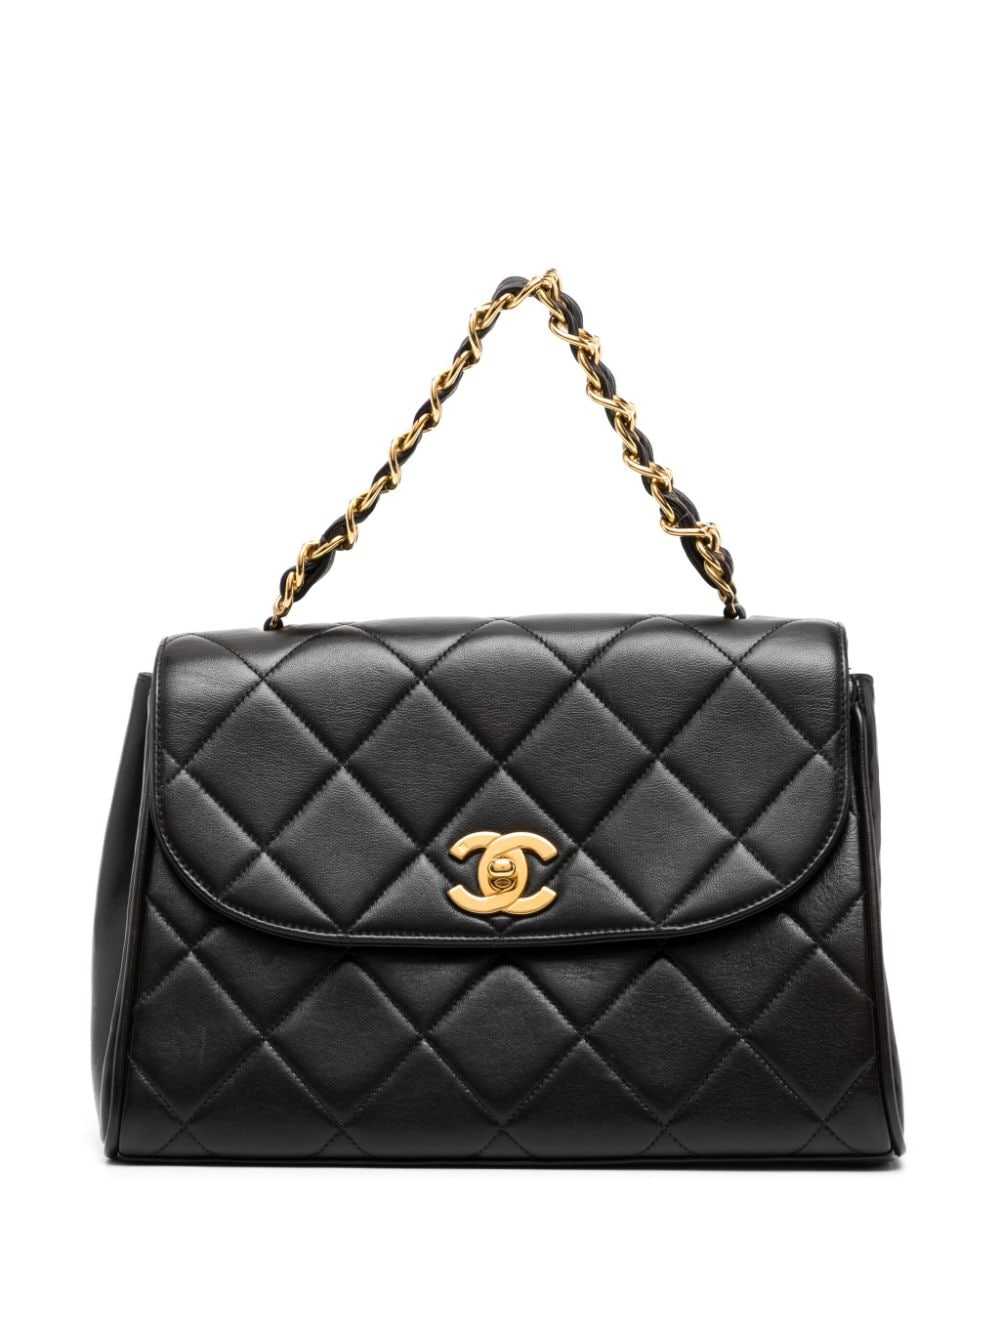 CHANEL Pre-Owned Classic Flap handbag - Black - image 1